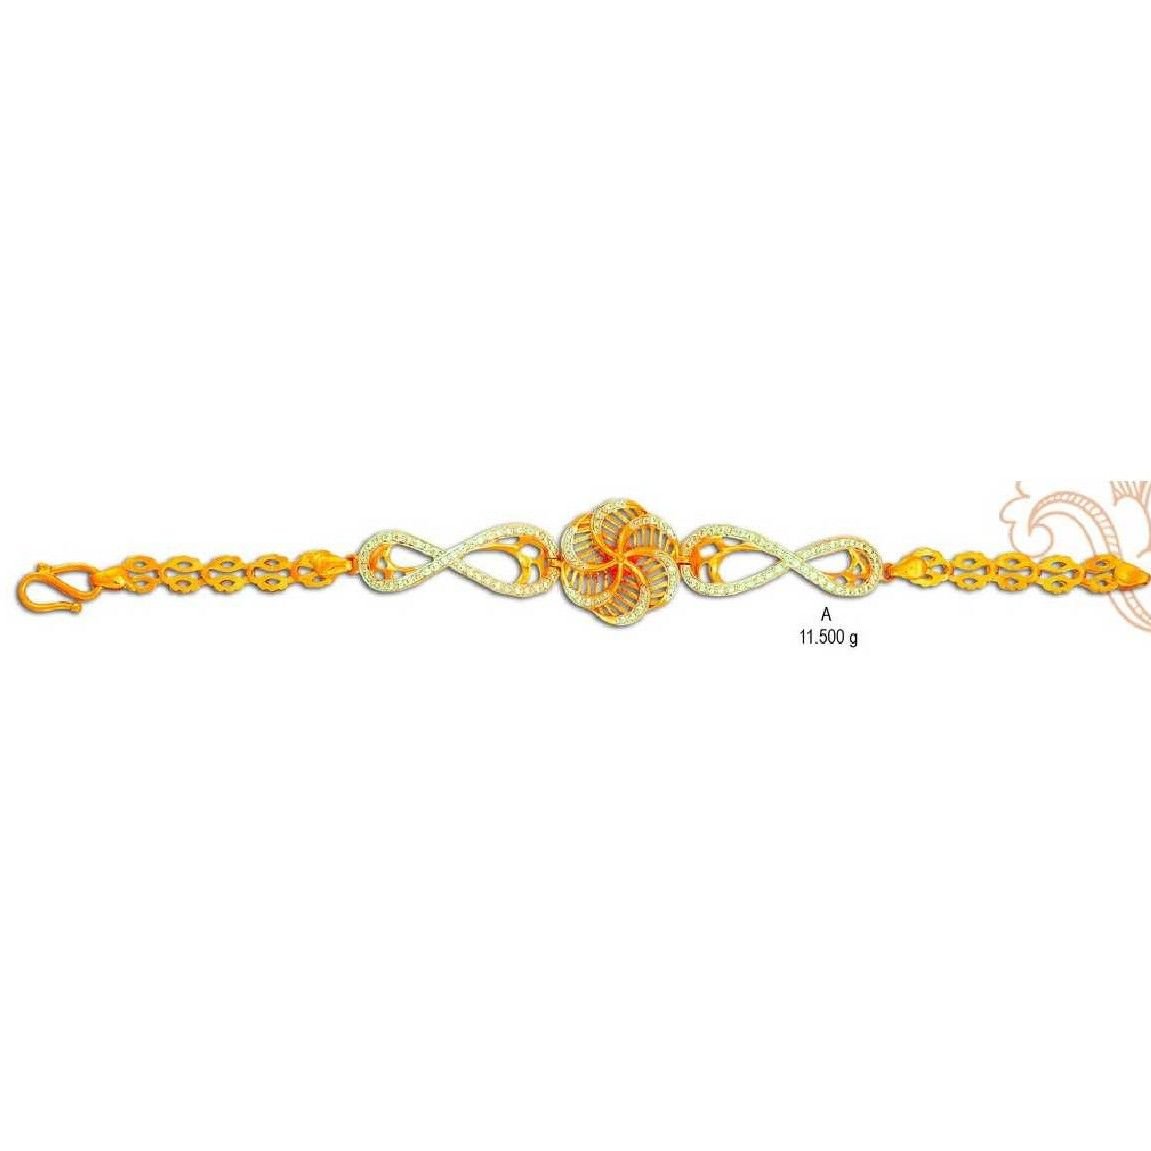 Lucky Ox with Beads Chinese Zodiac Red String Bracelet (24K) – Popular J